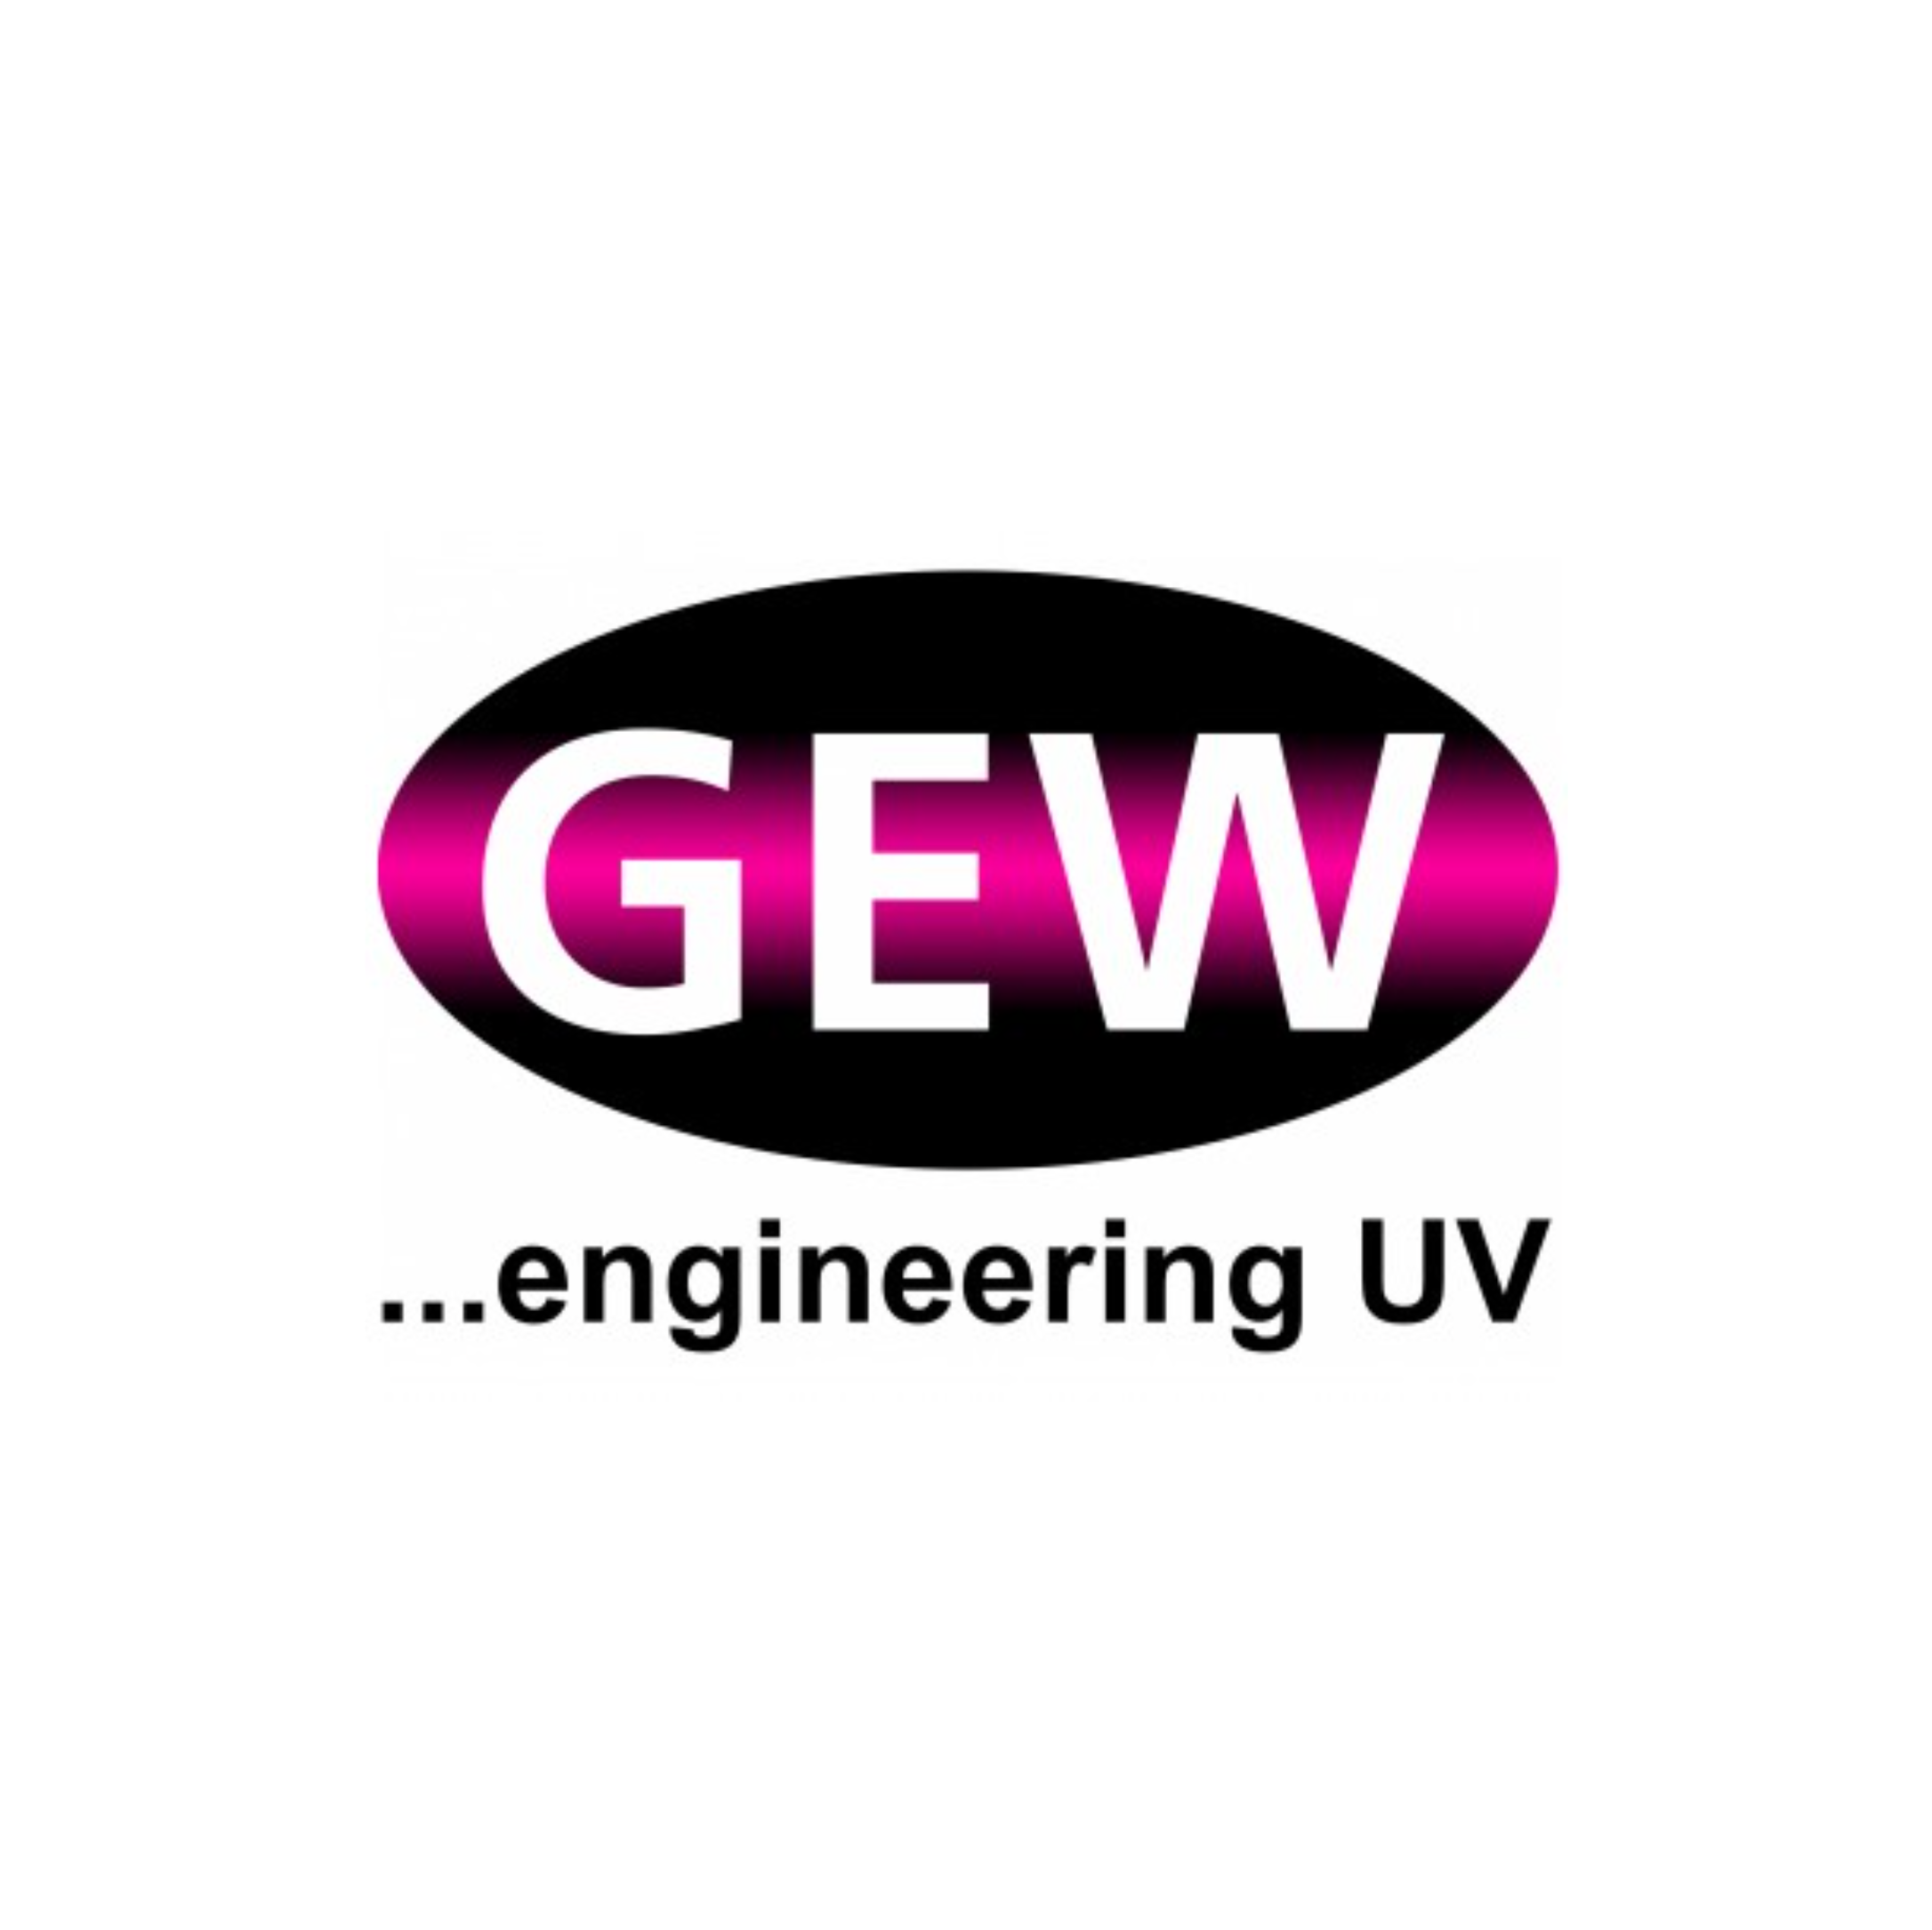 GEW Logo